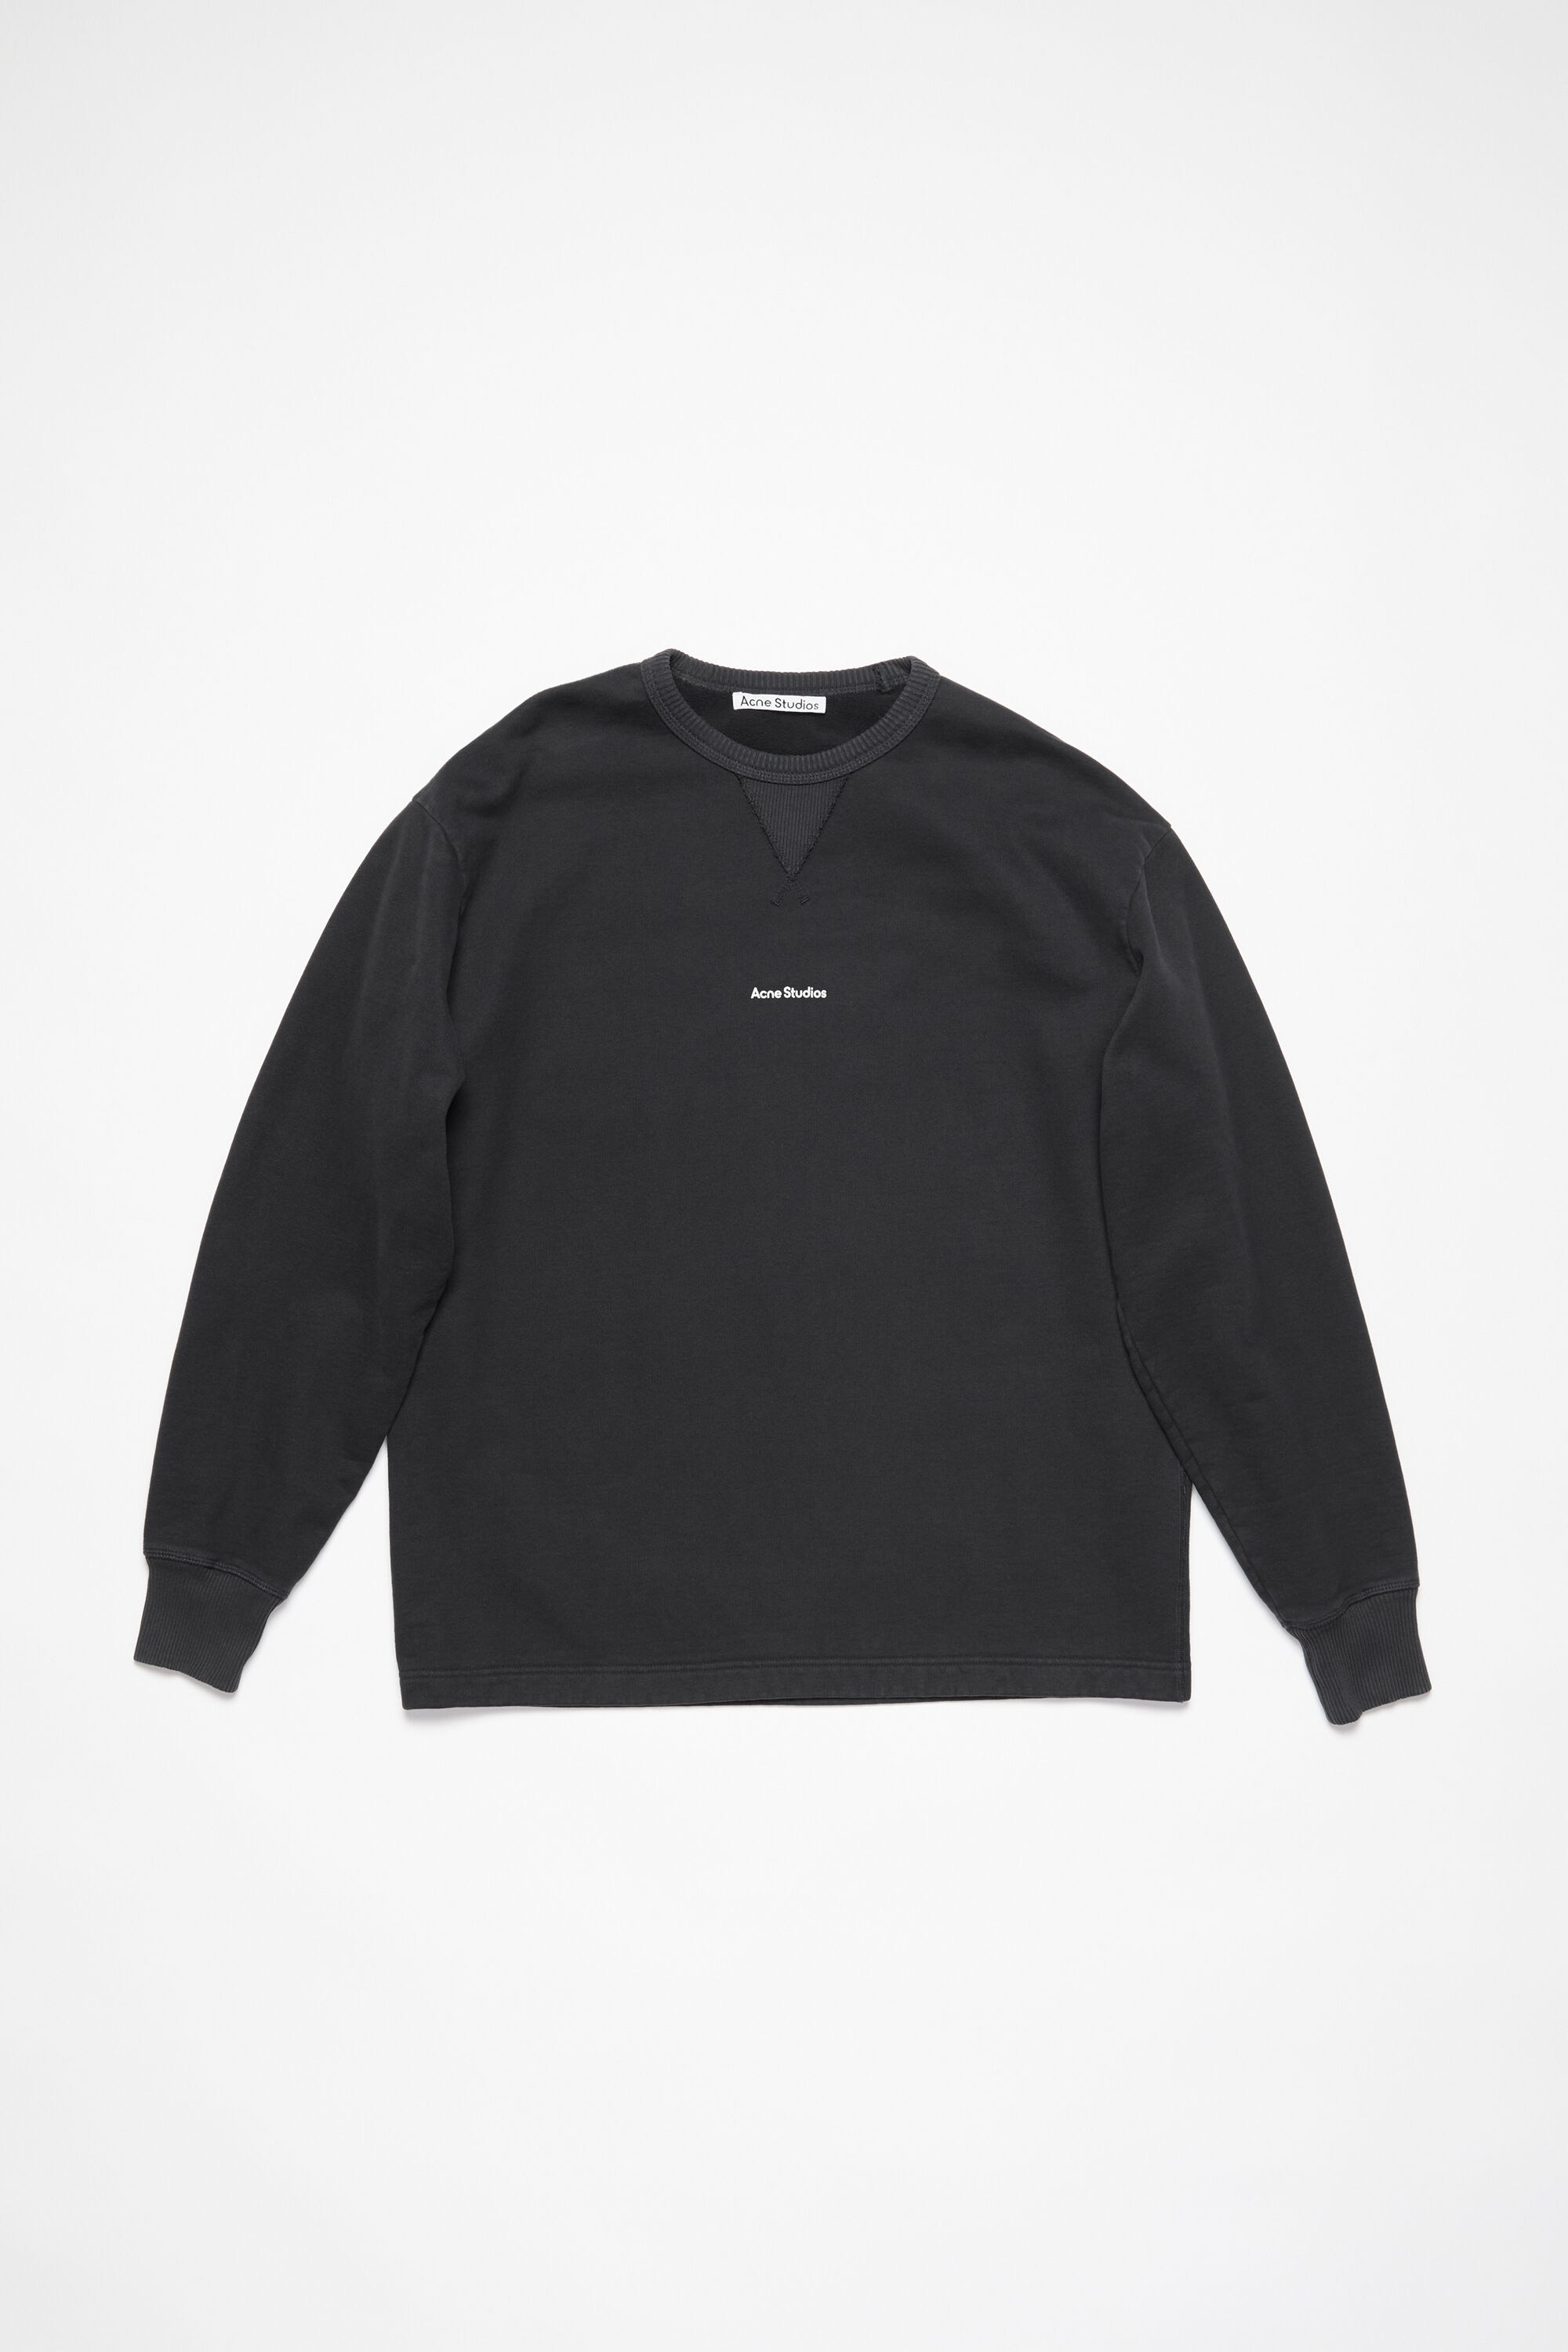 Acne Studios - Logo sweater - Black